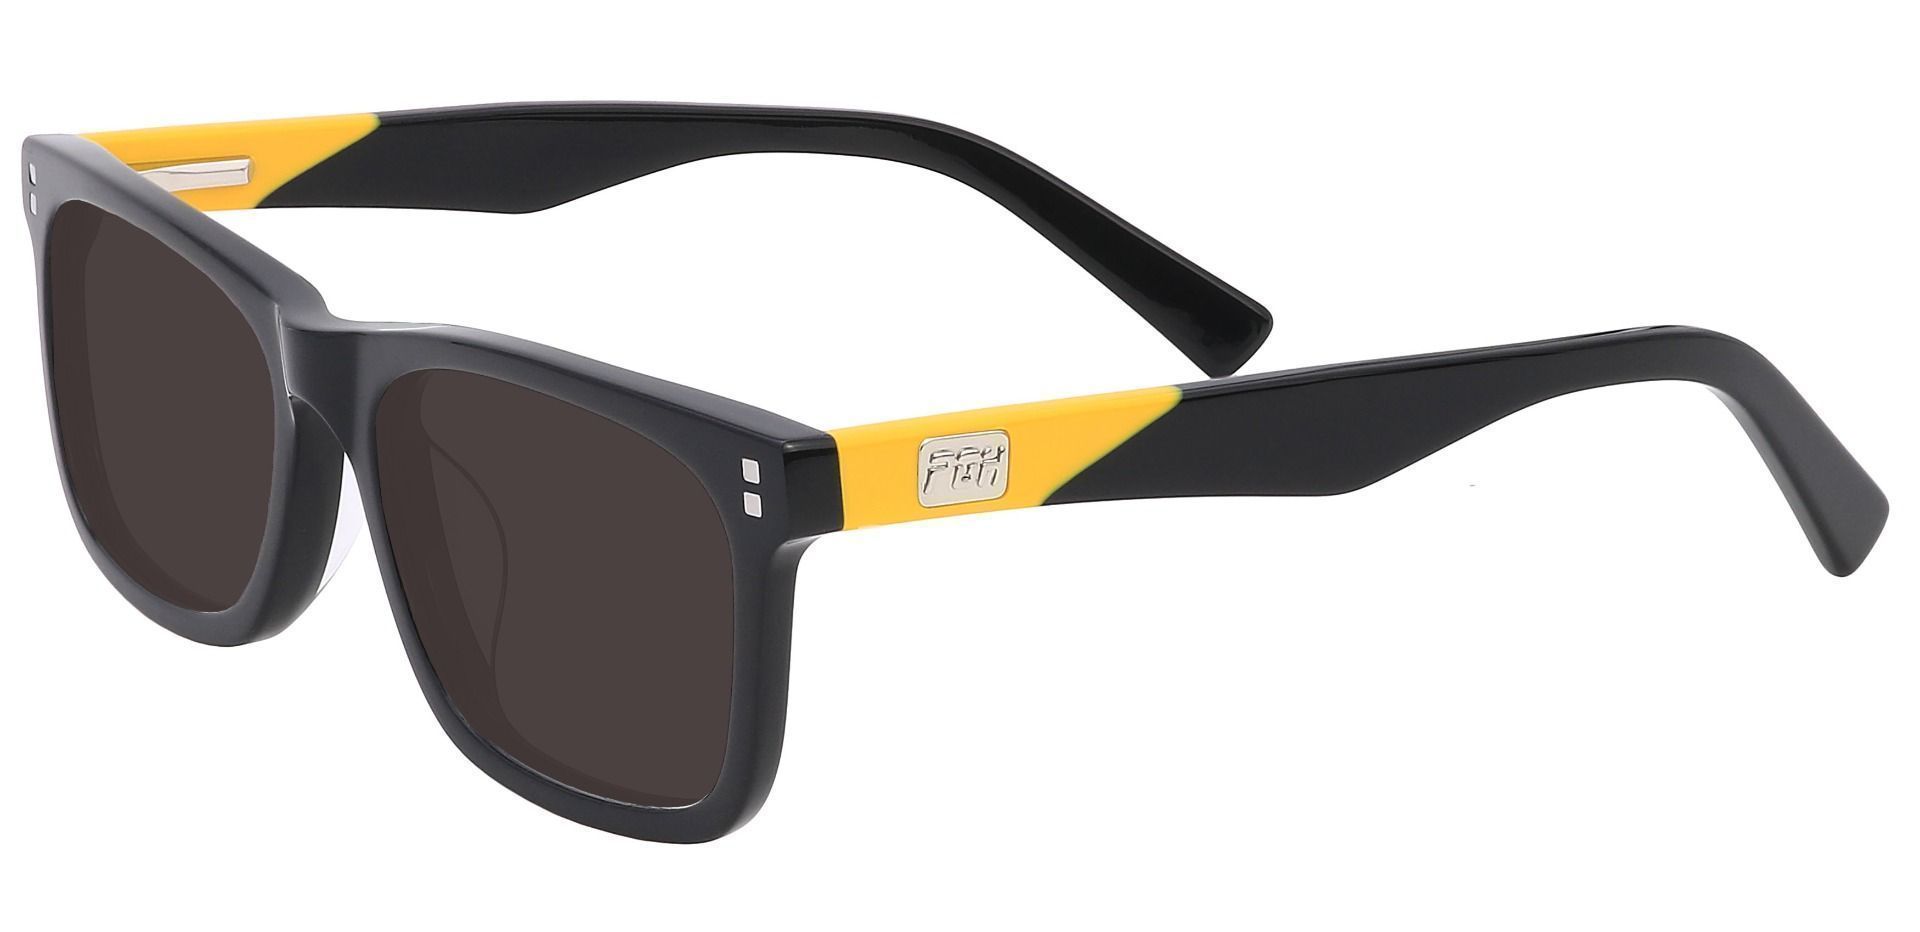 Liberty Rectangle Prescription Sunglasses - Black Frame With Gray Lenses